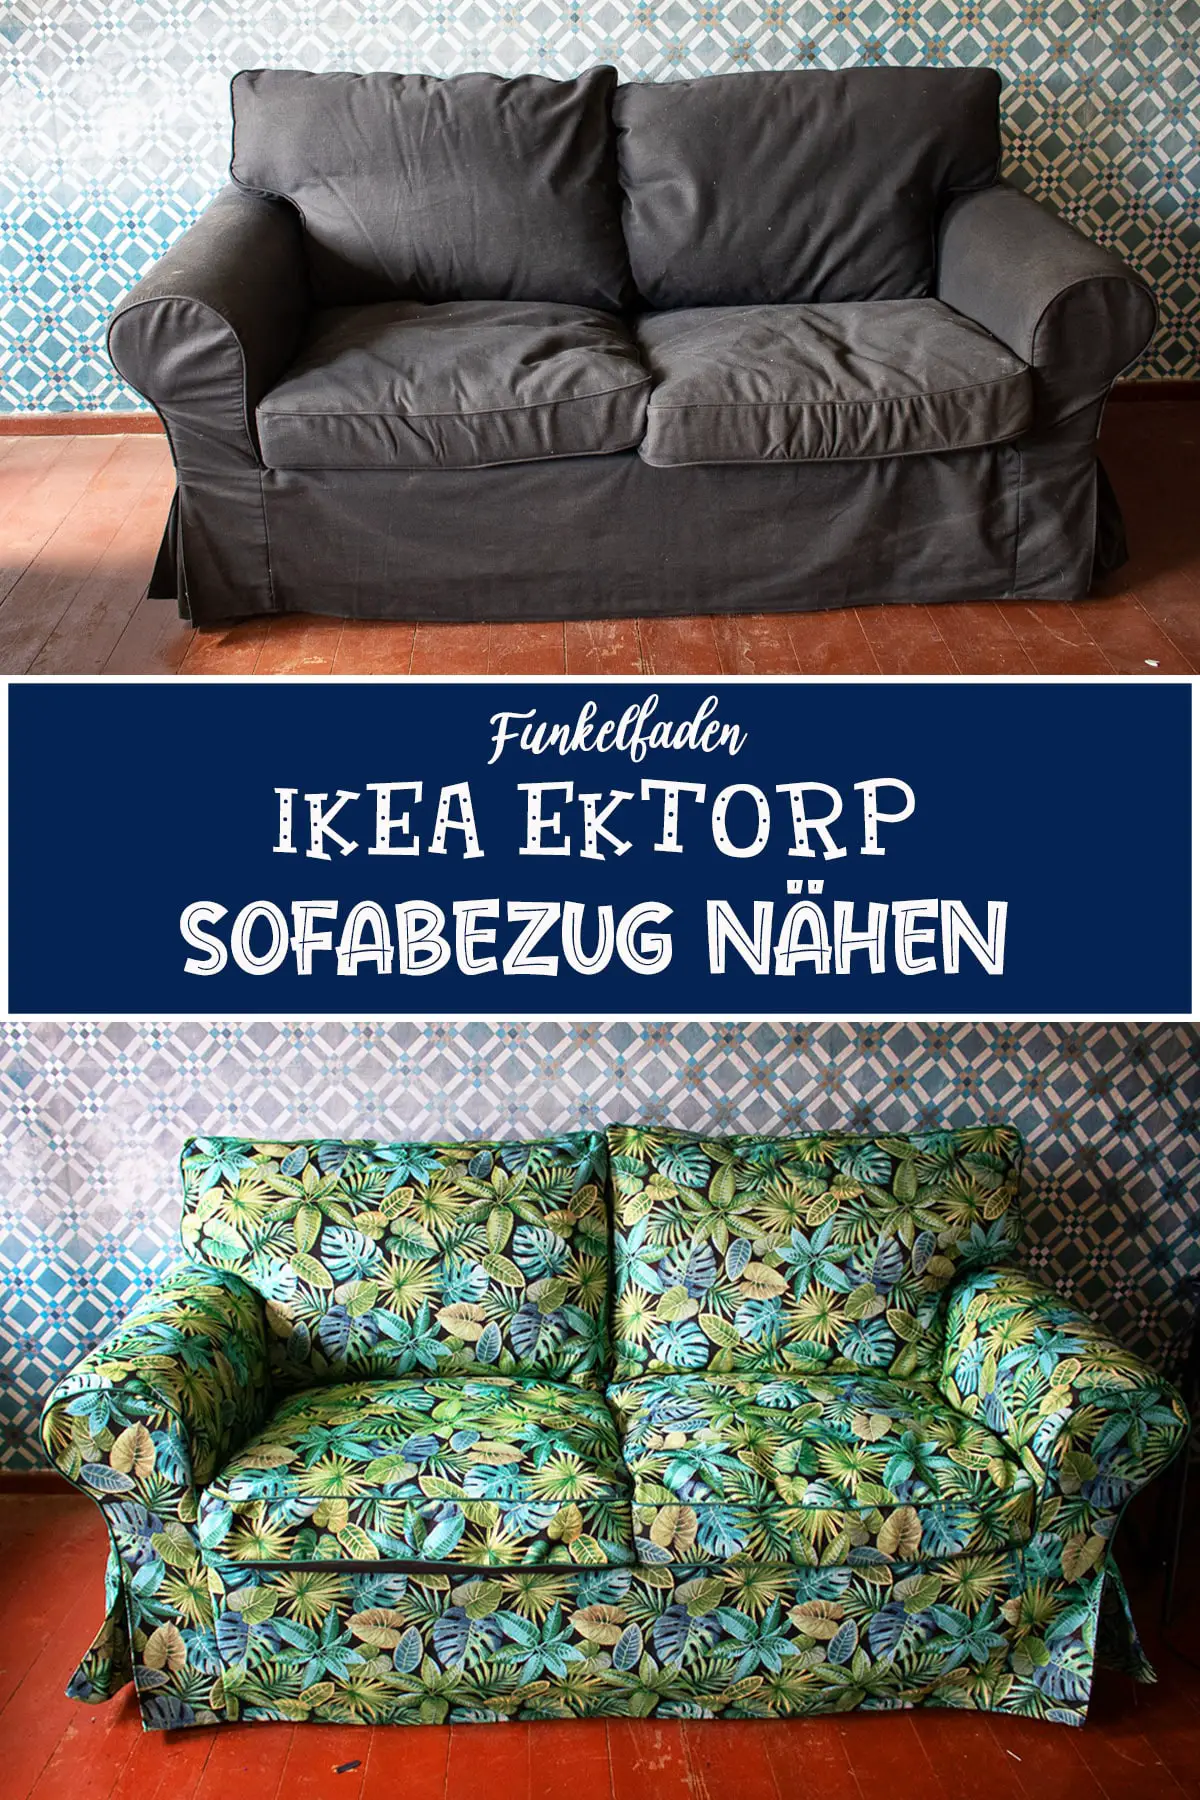 Diy Anleitung Sofa Bezug Nahen Fur Ikea Ektorp Einfach